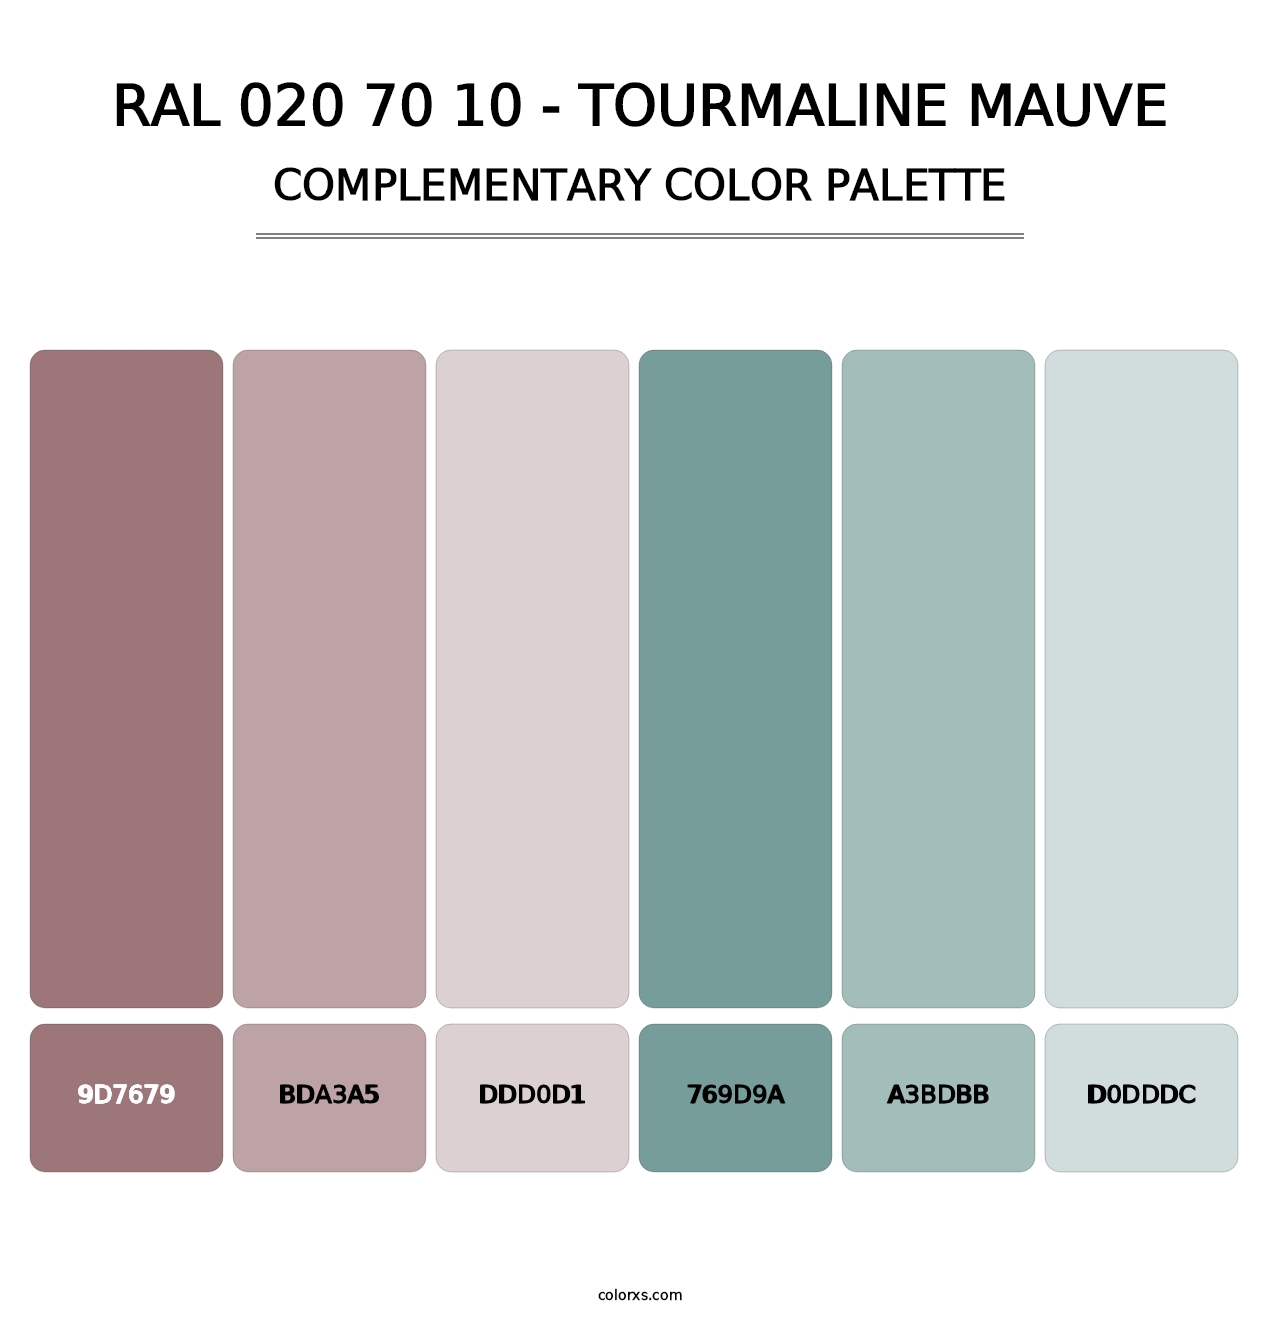 RAL 020 70 10 - Tourmaline Mauve - Complementary Color Palette